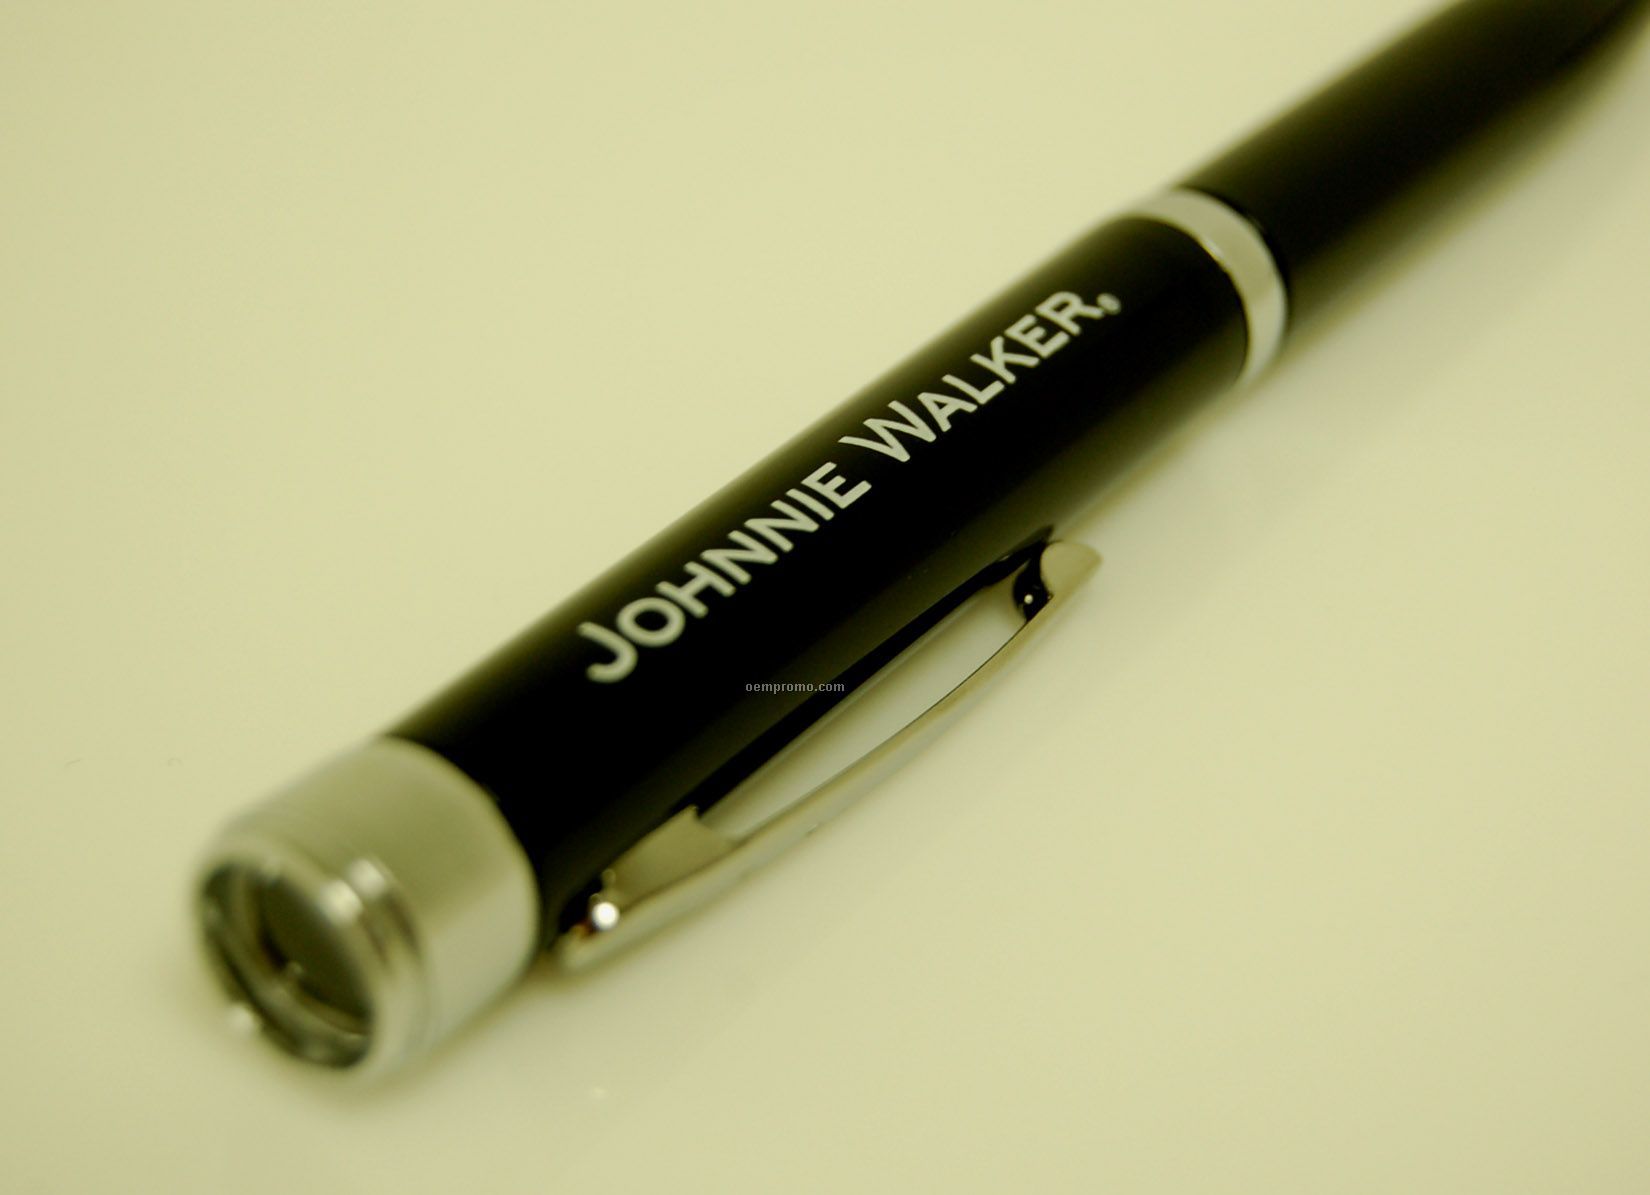 Logolight Projection Pen